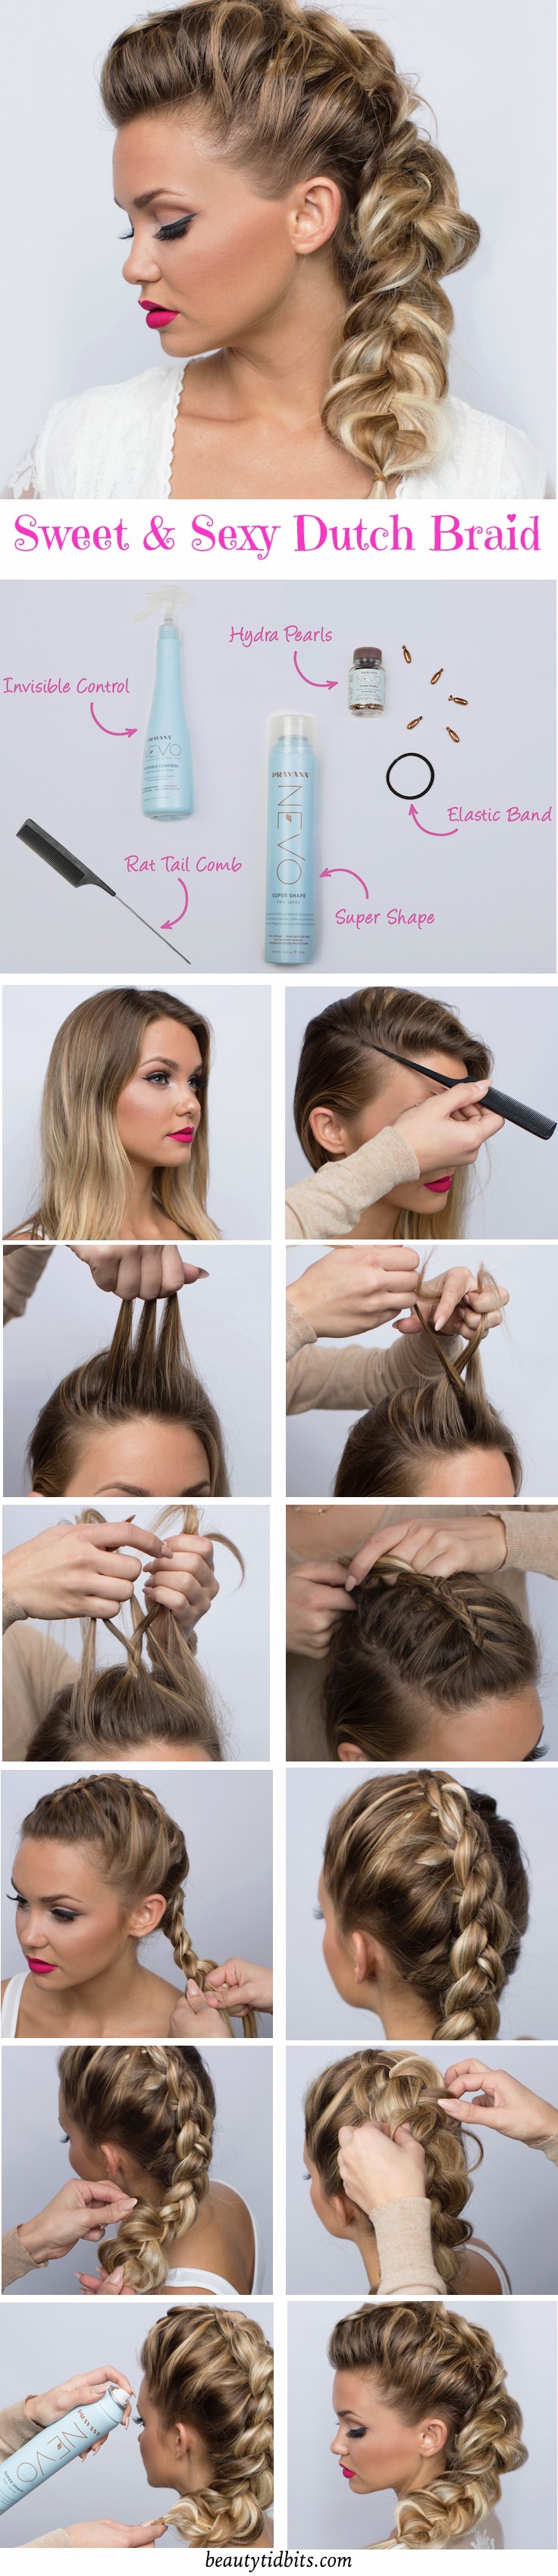 Faux Hawk hairstyle tutorial